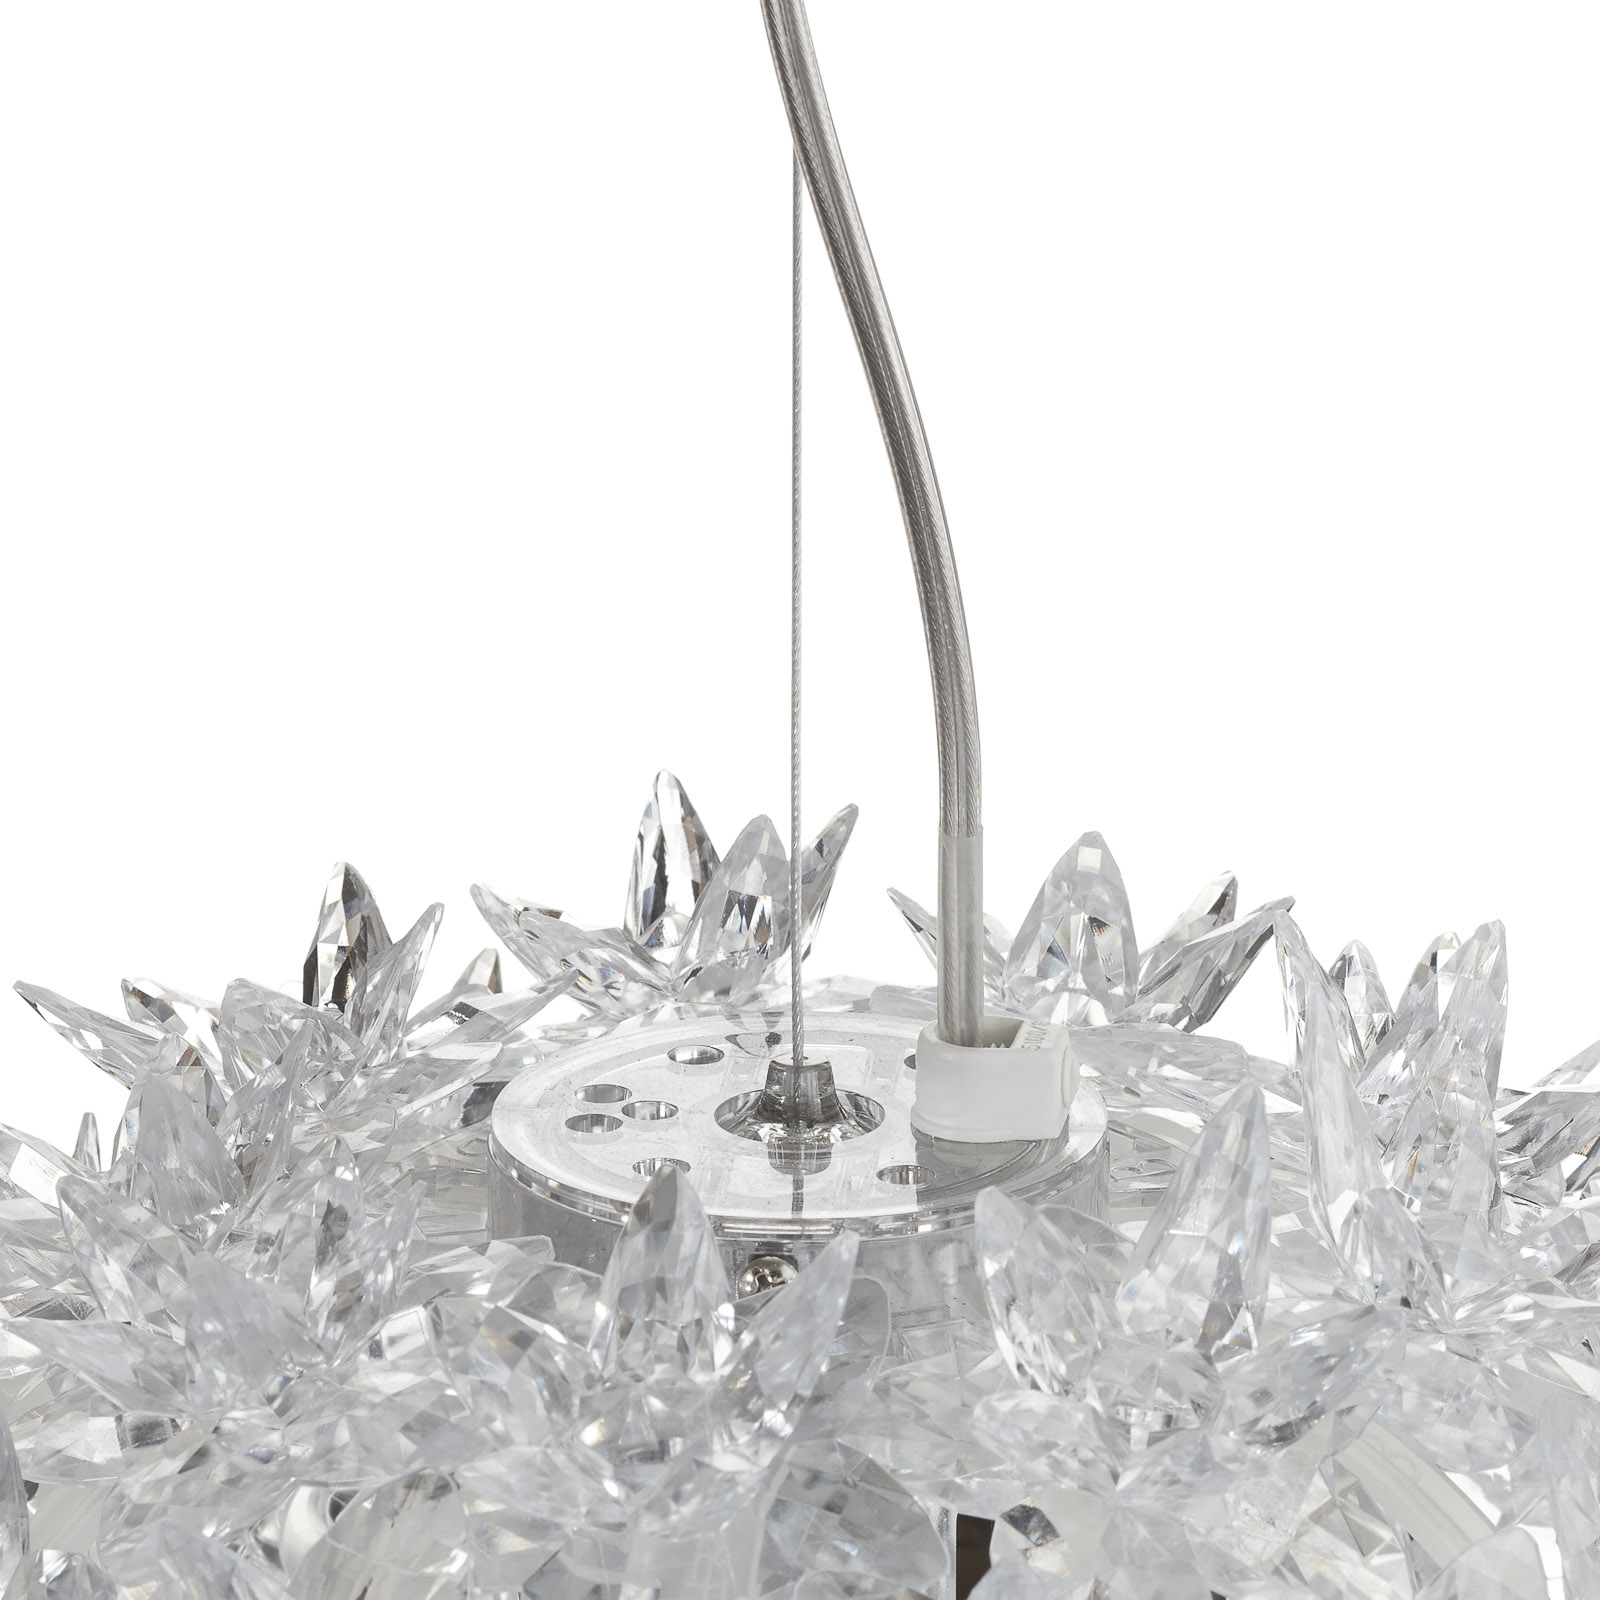 Transparante LED design hanglamp Bloom, 28 cm